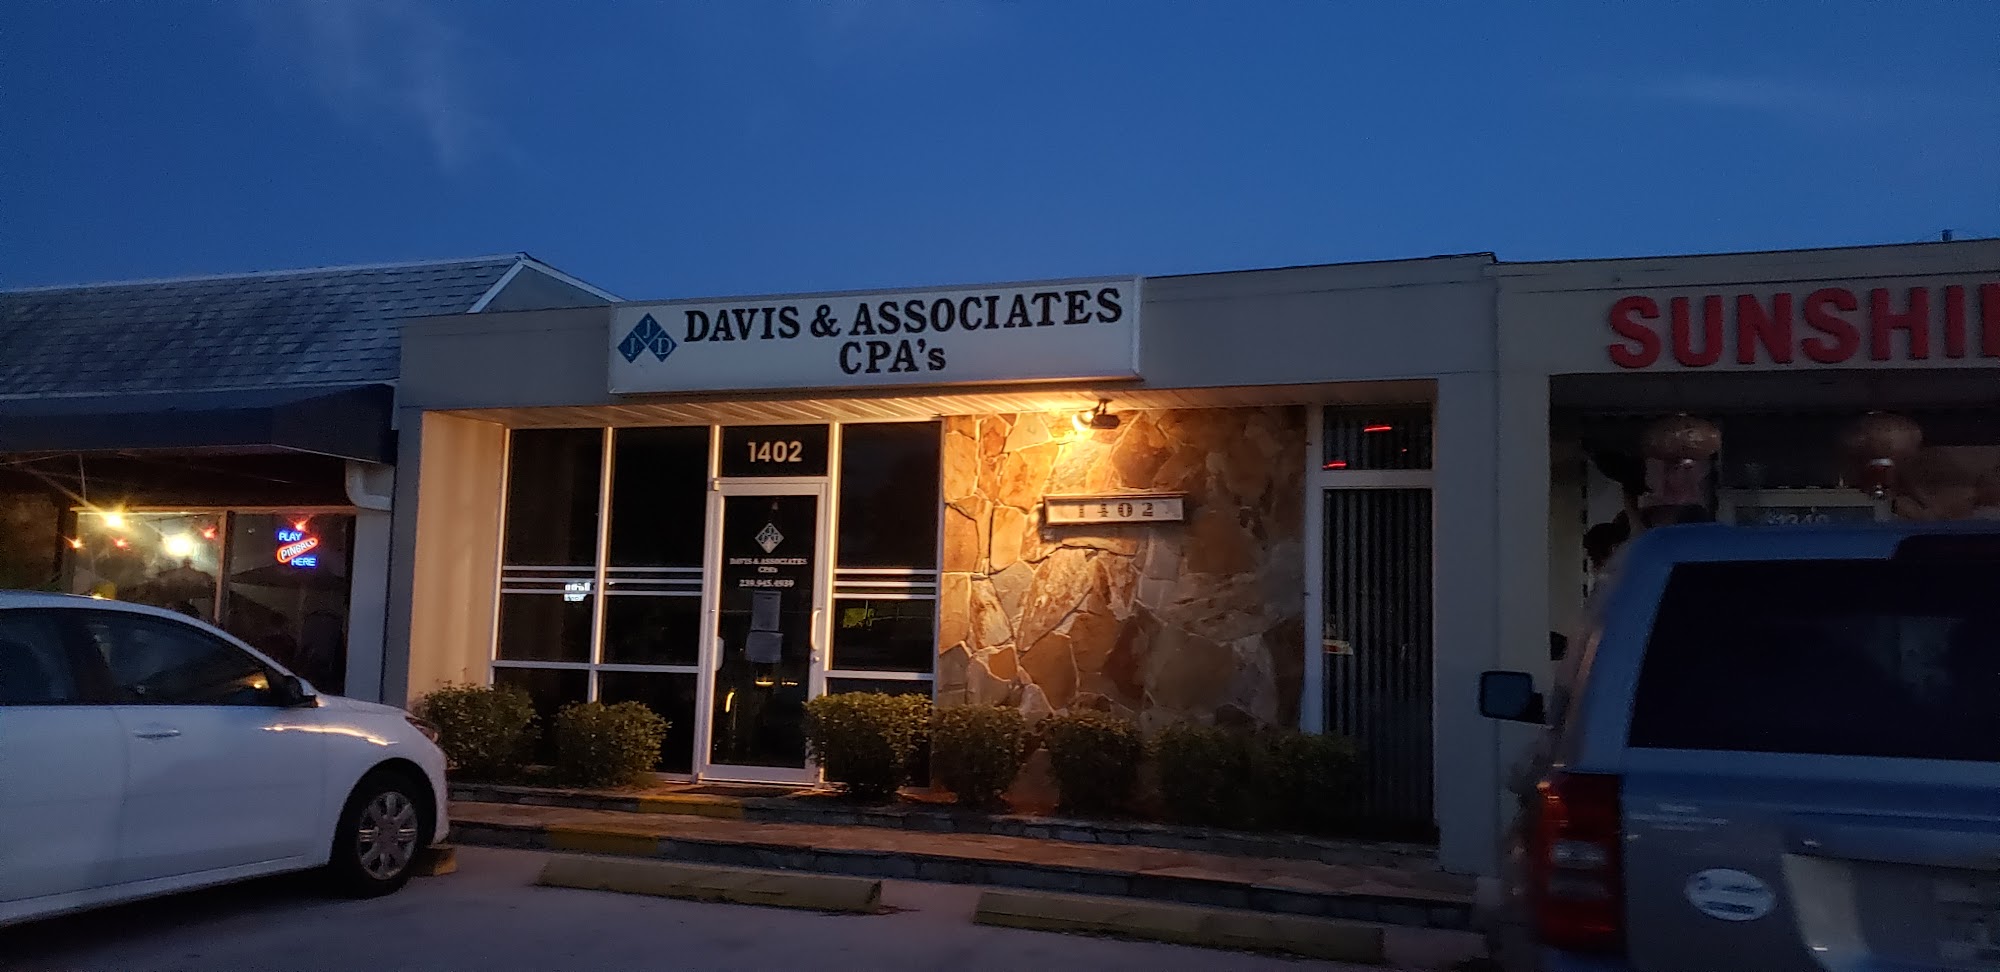 Davis & Associates, CPA